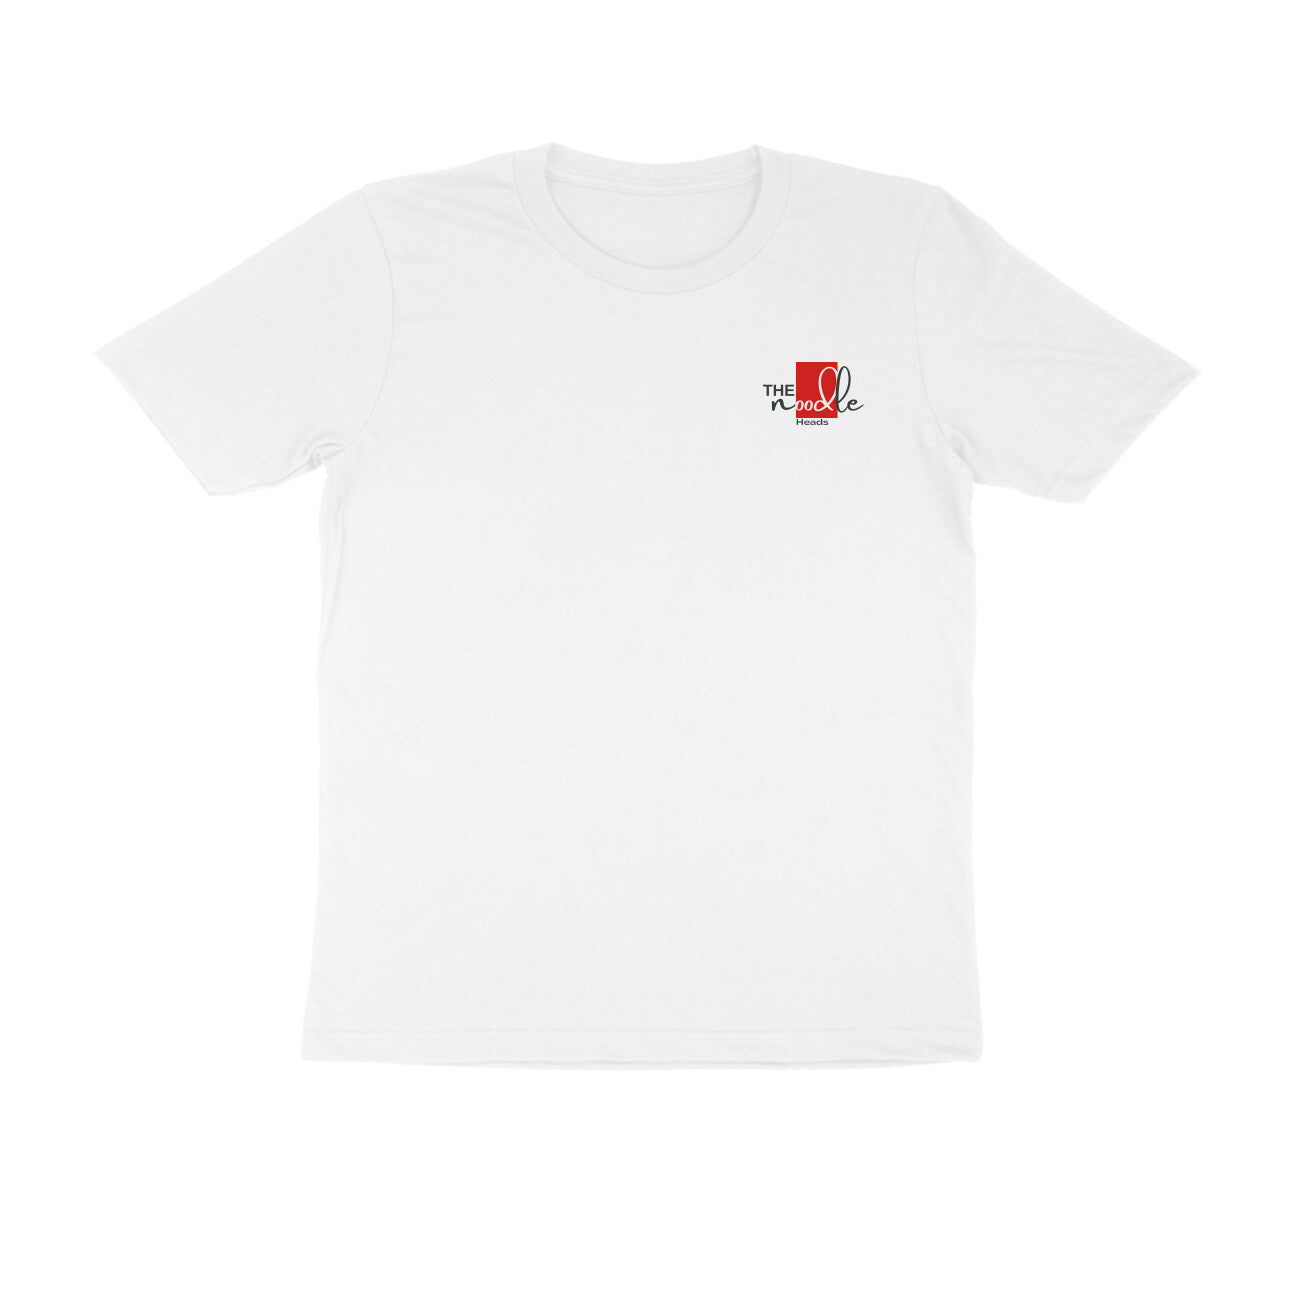 Men's White Tshirt - TNH (Red)